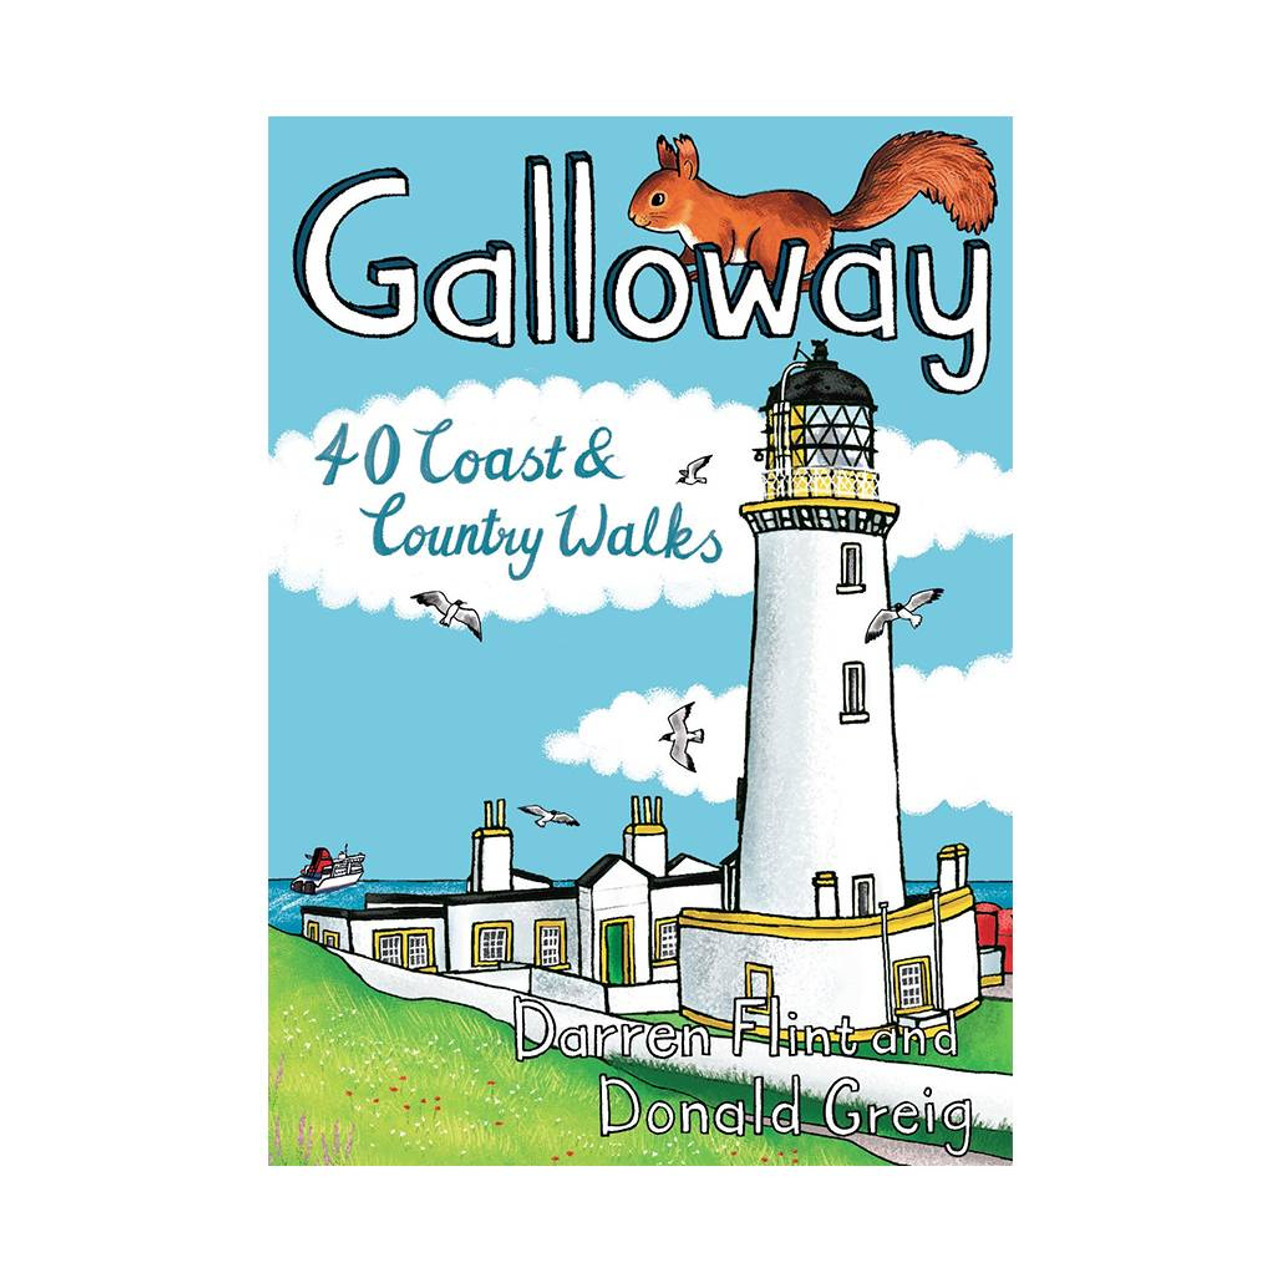 Galloway: 40 CoastandCountry Walks